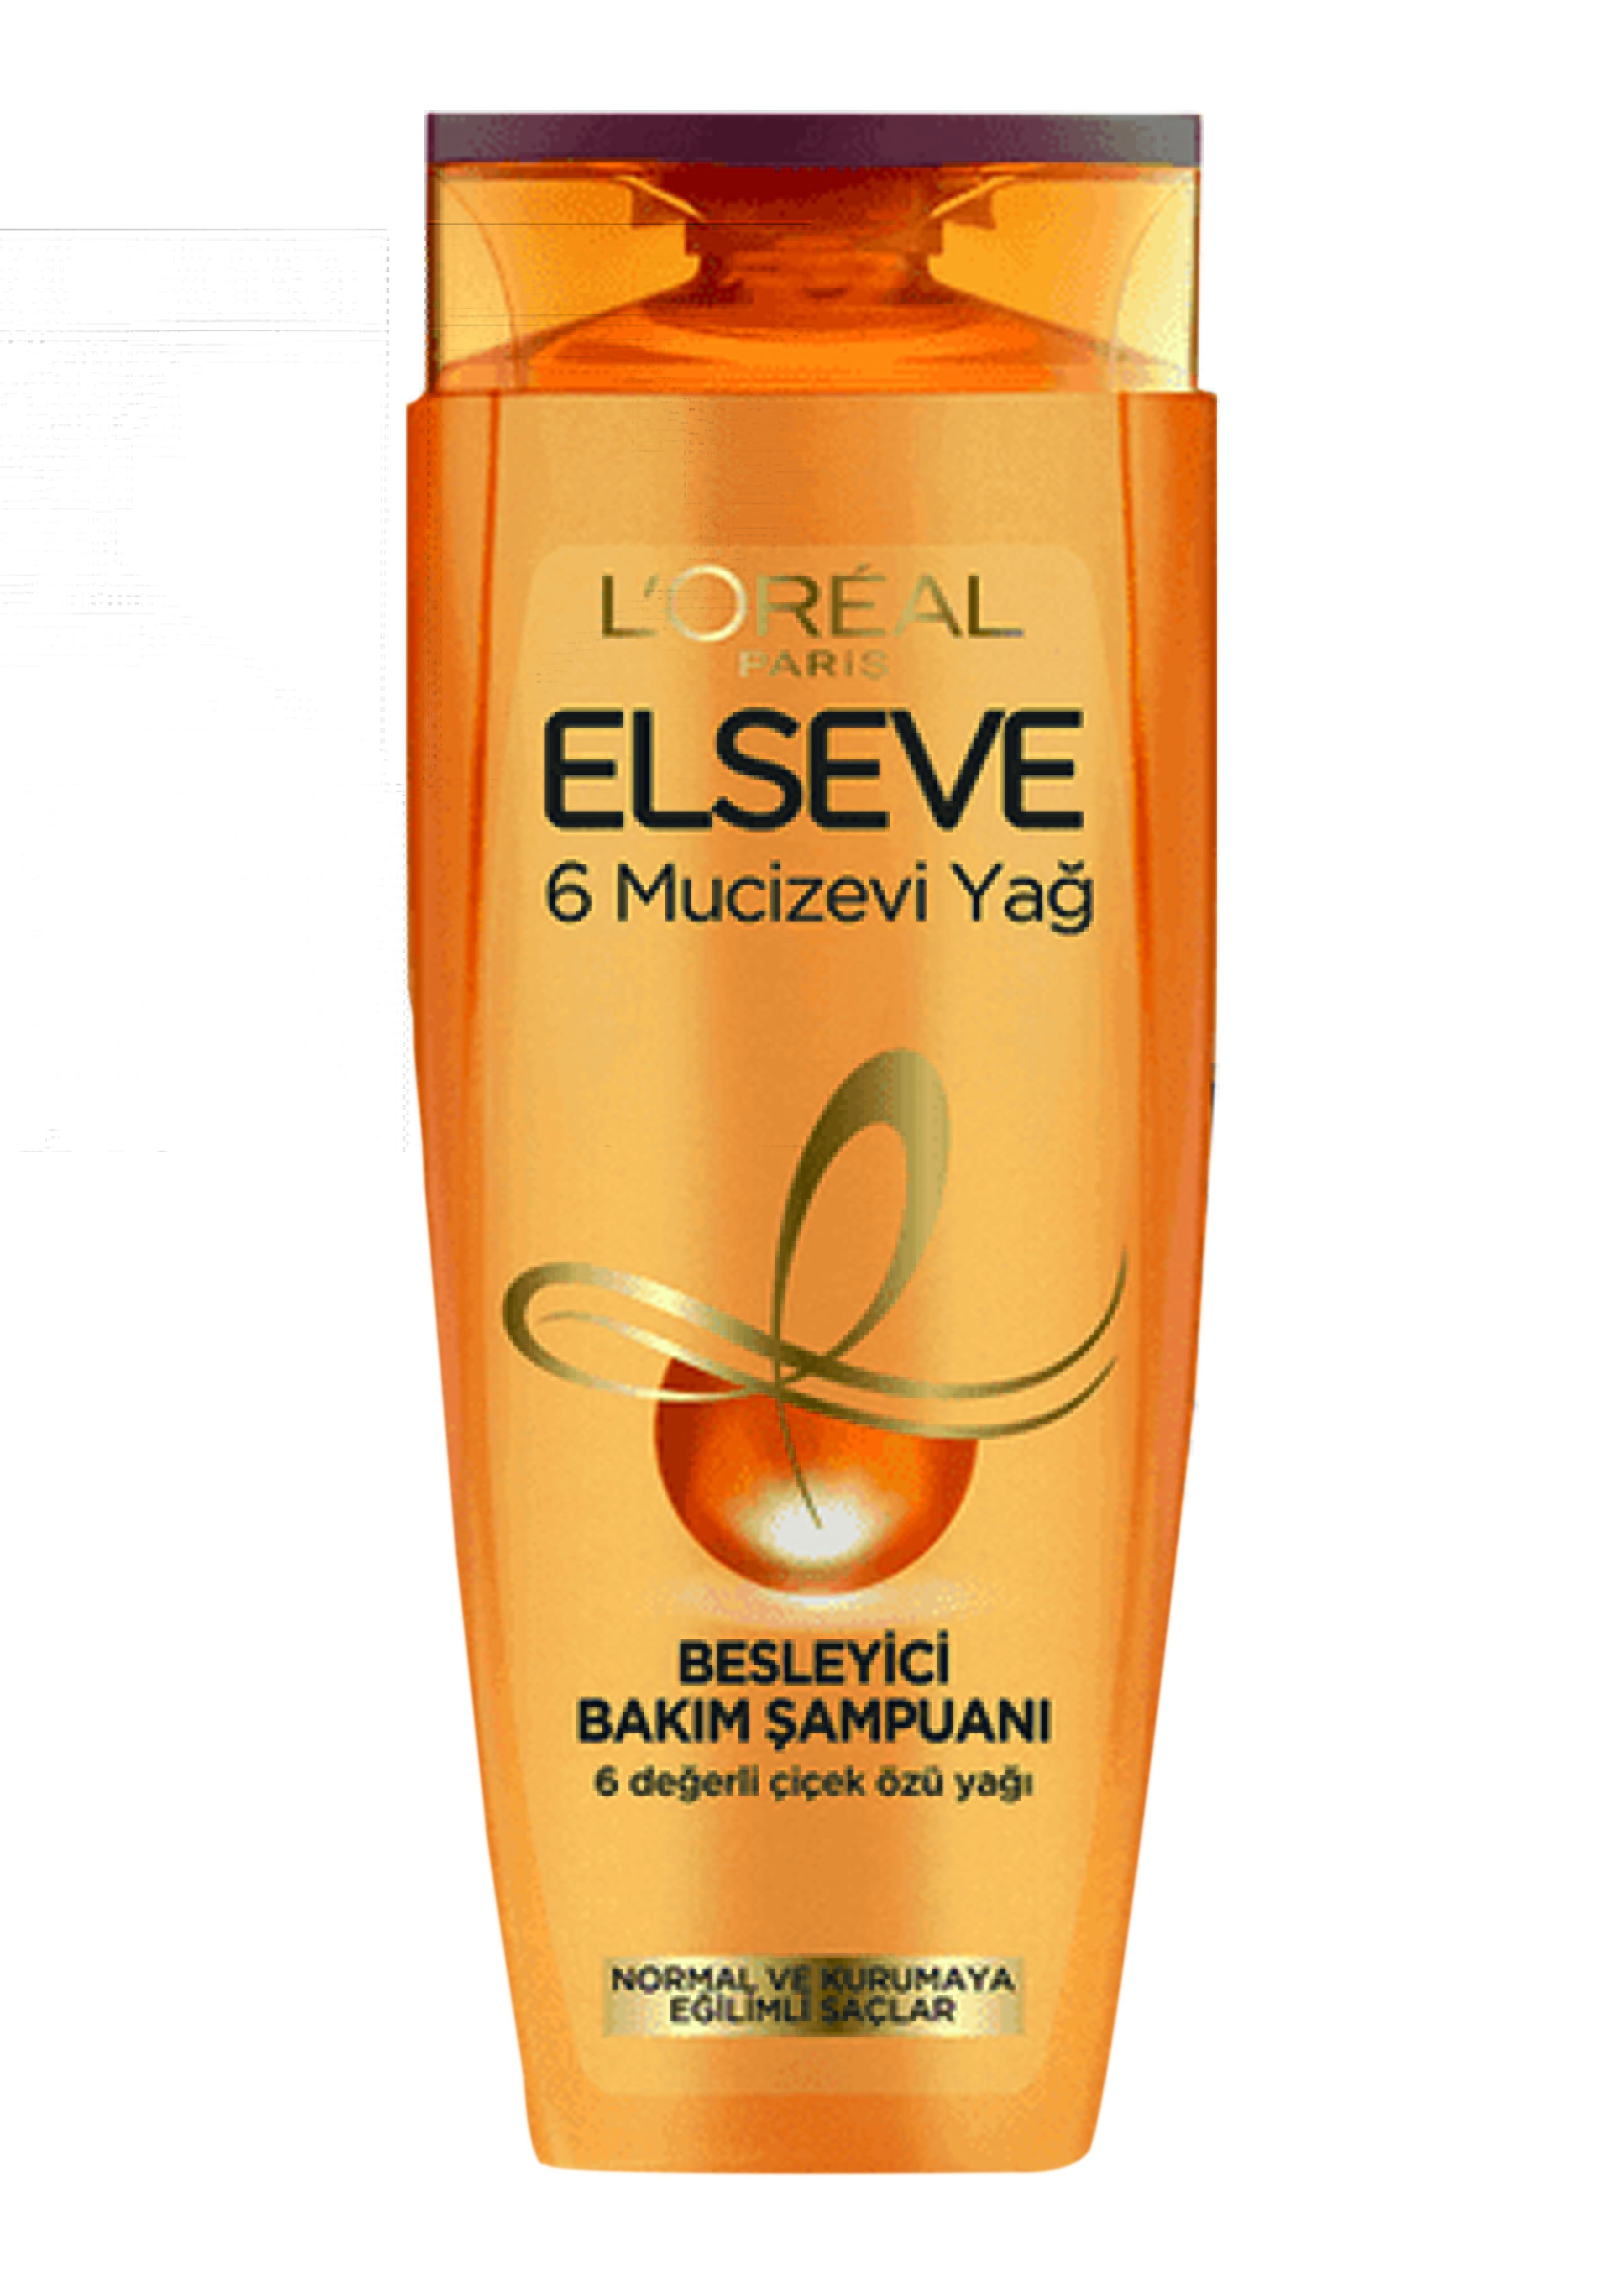 Elseve Shampoo Miraculous Oil 450 ml 